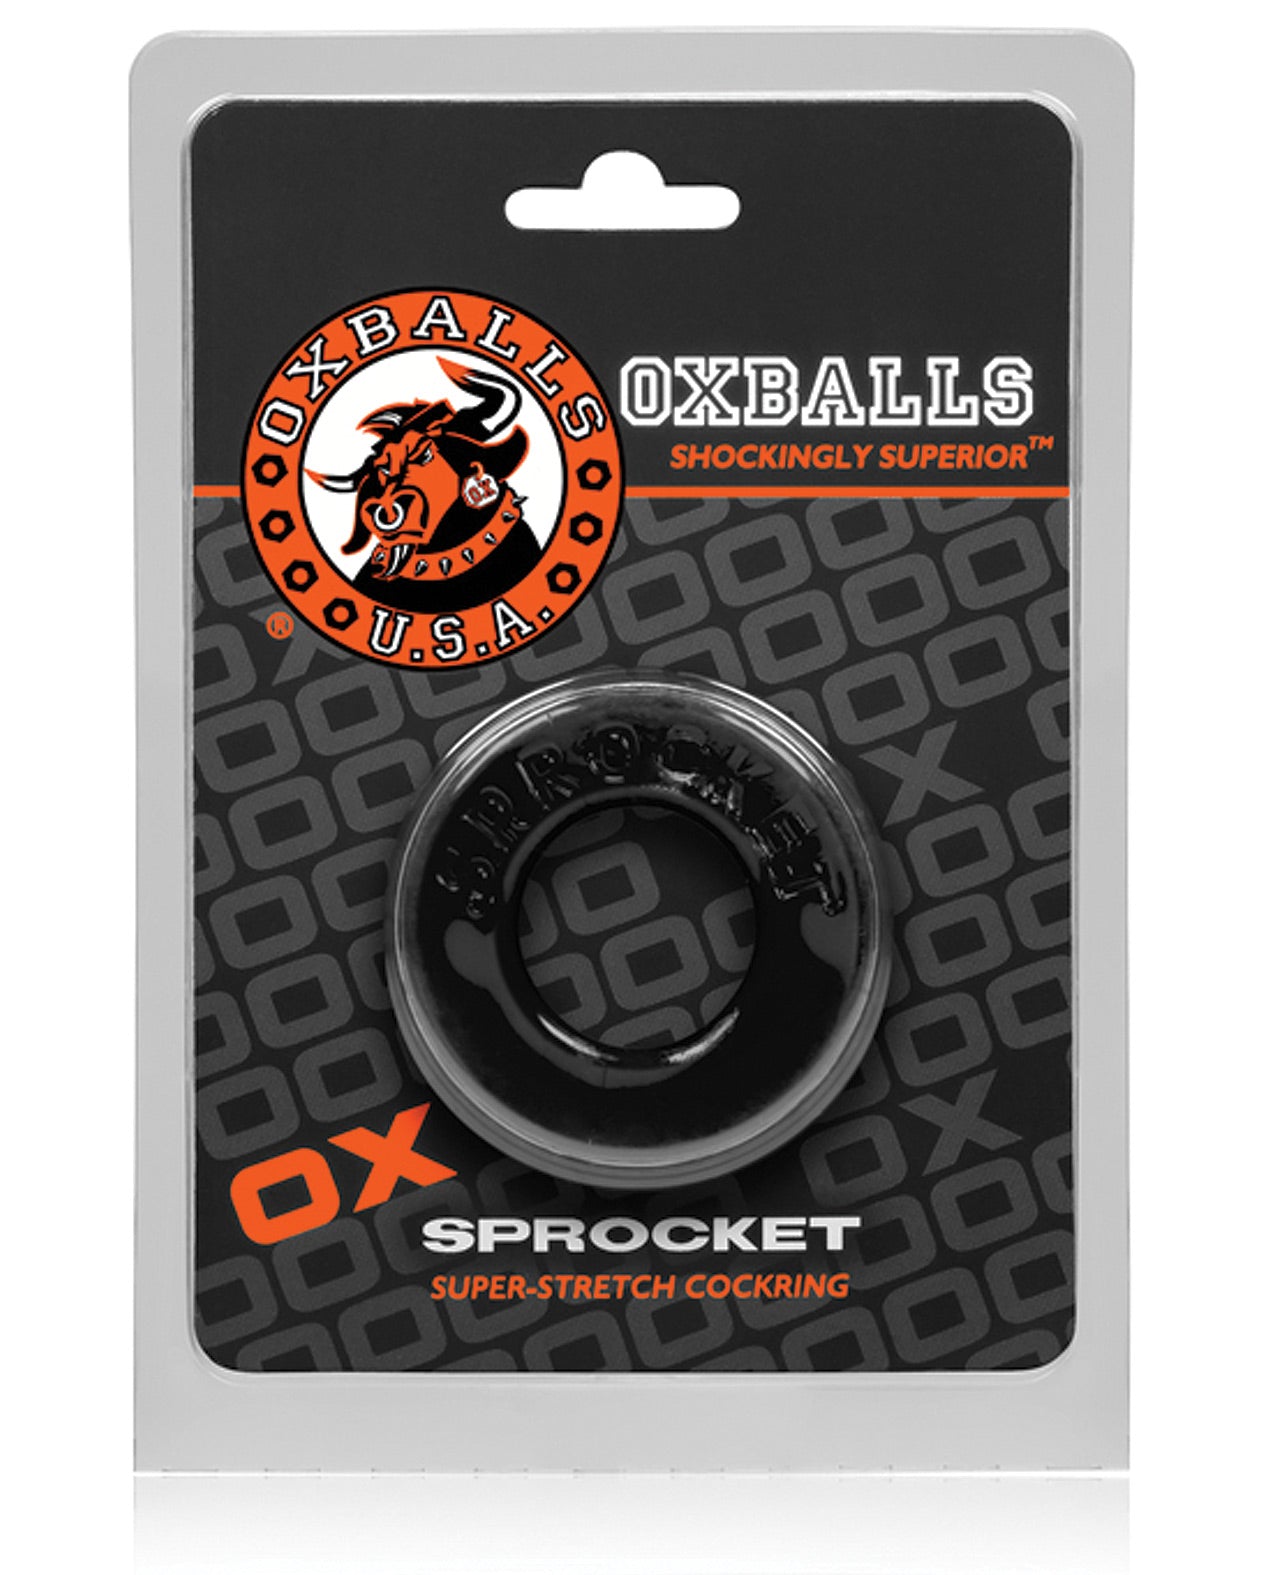 Oxballs Atomic Jock Sprocket Cockring - Black - LUST Depot